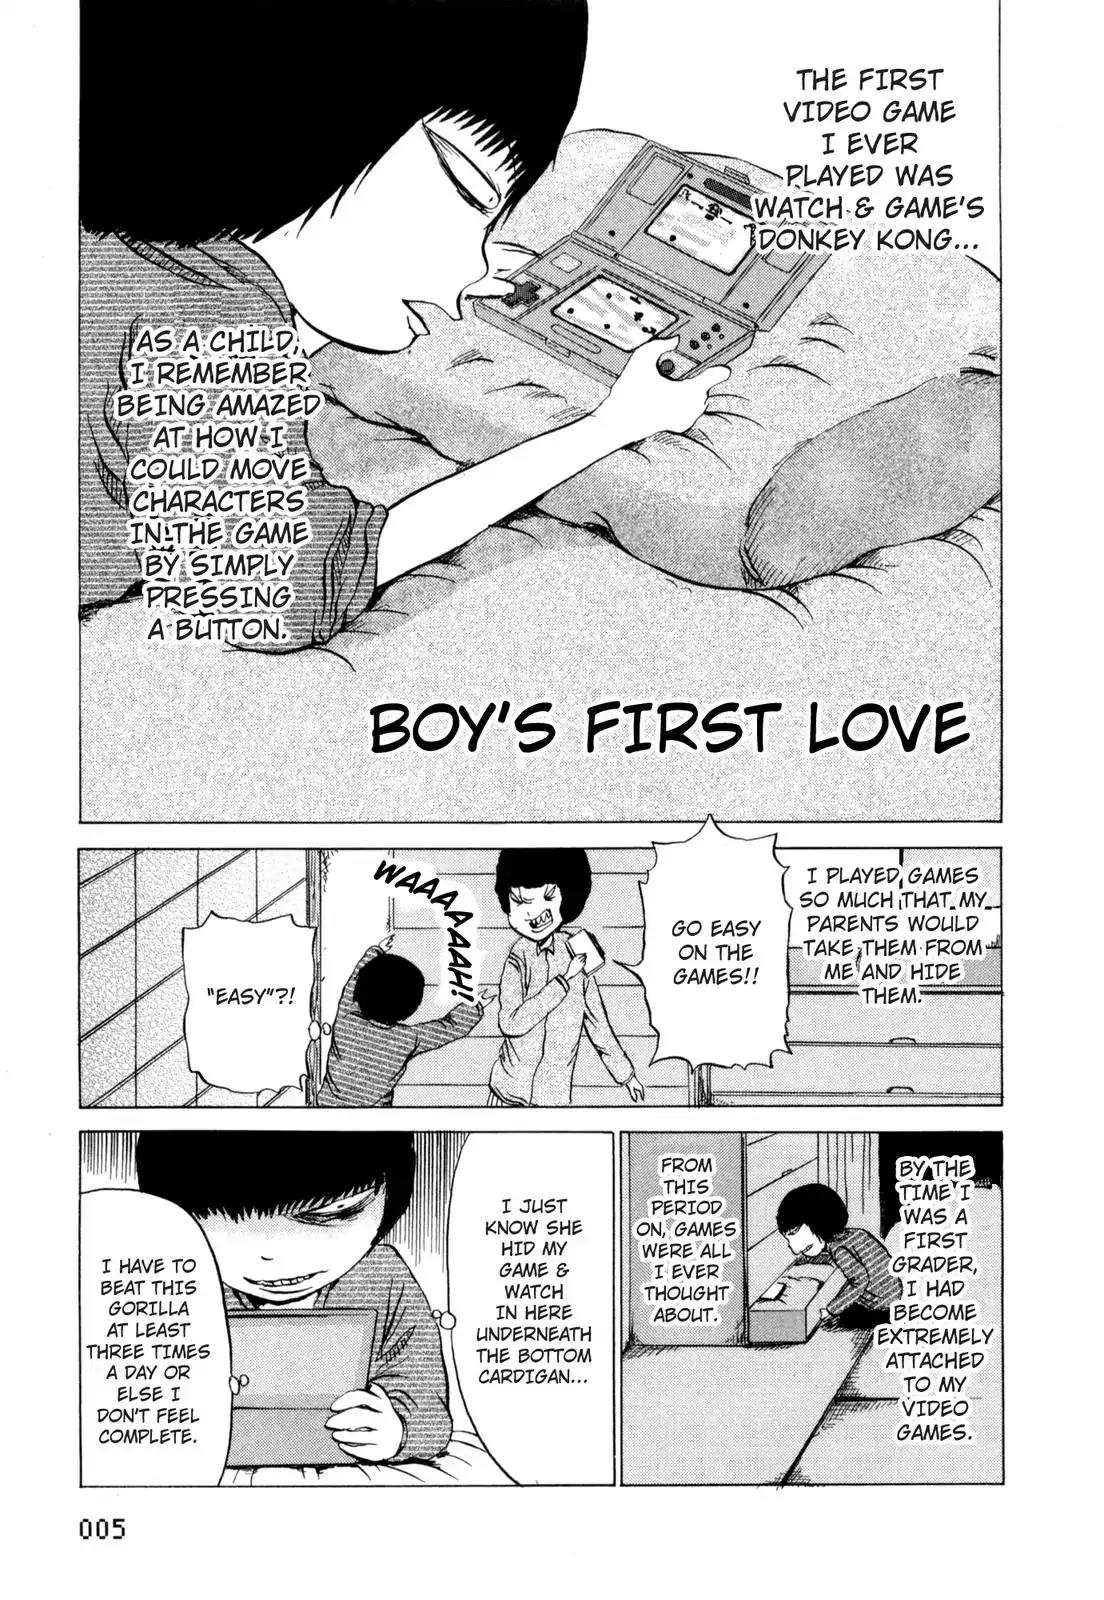 Pico-Pico Boy Vol.1 BOY'S FIRST LOVE